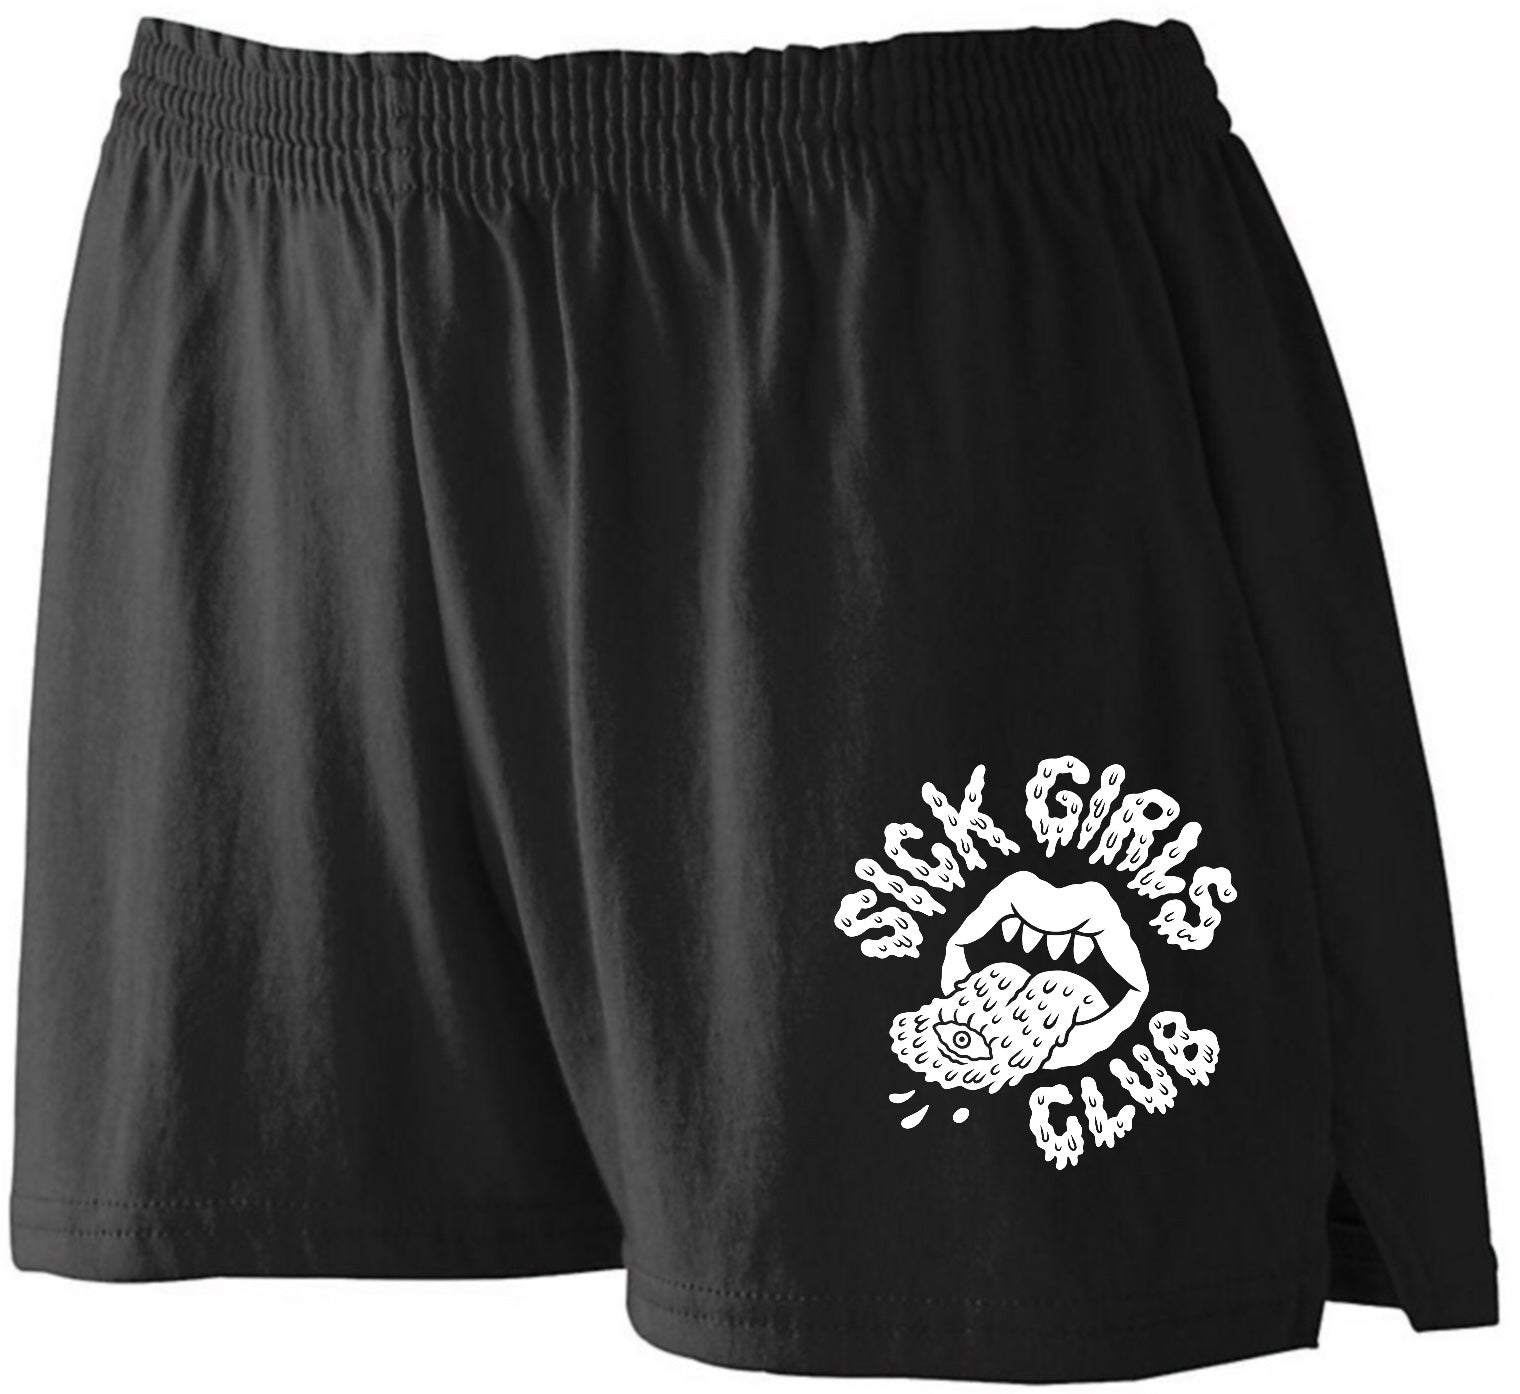 Sick Girls Club Shorts Black